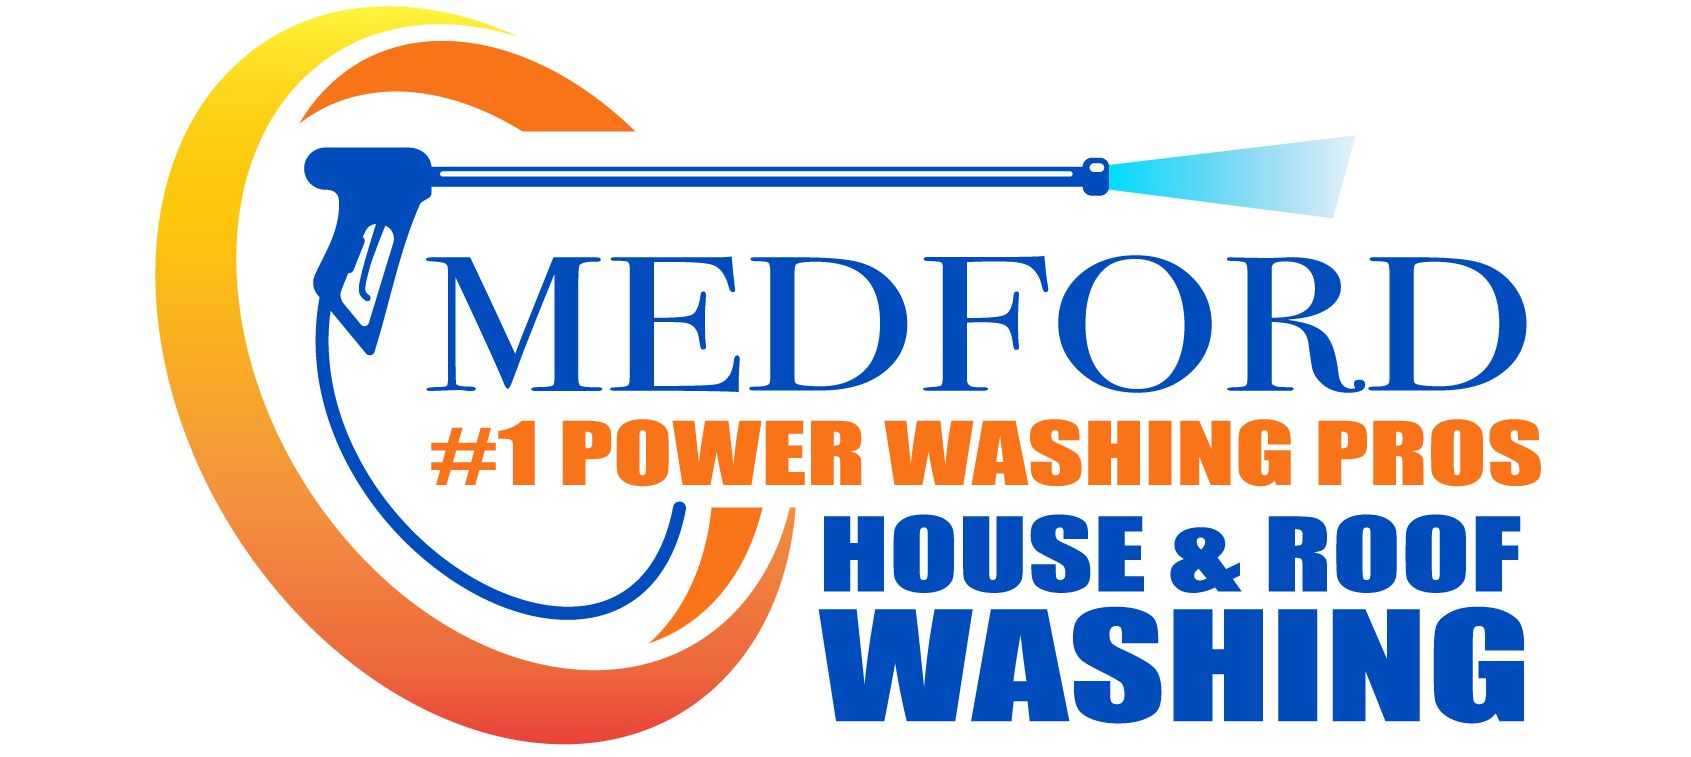 Medford's #1 Power Washing